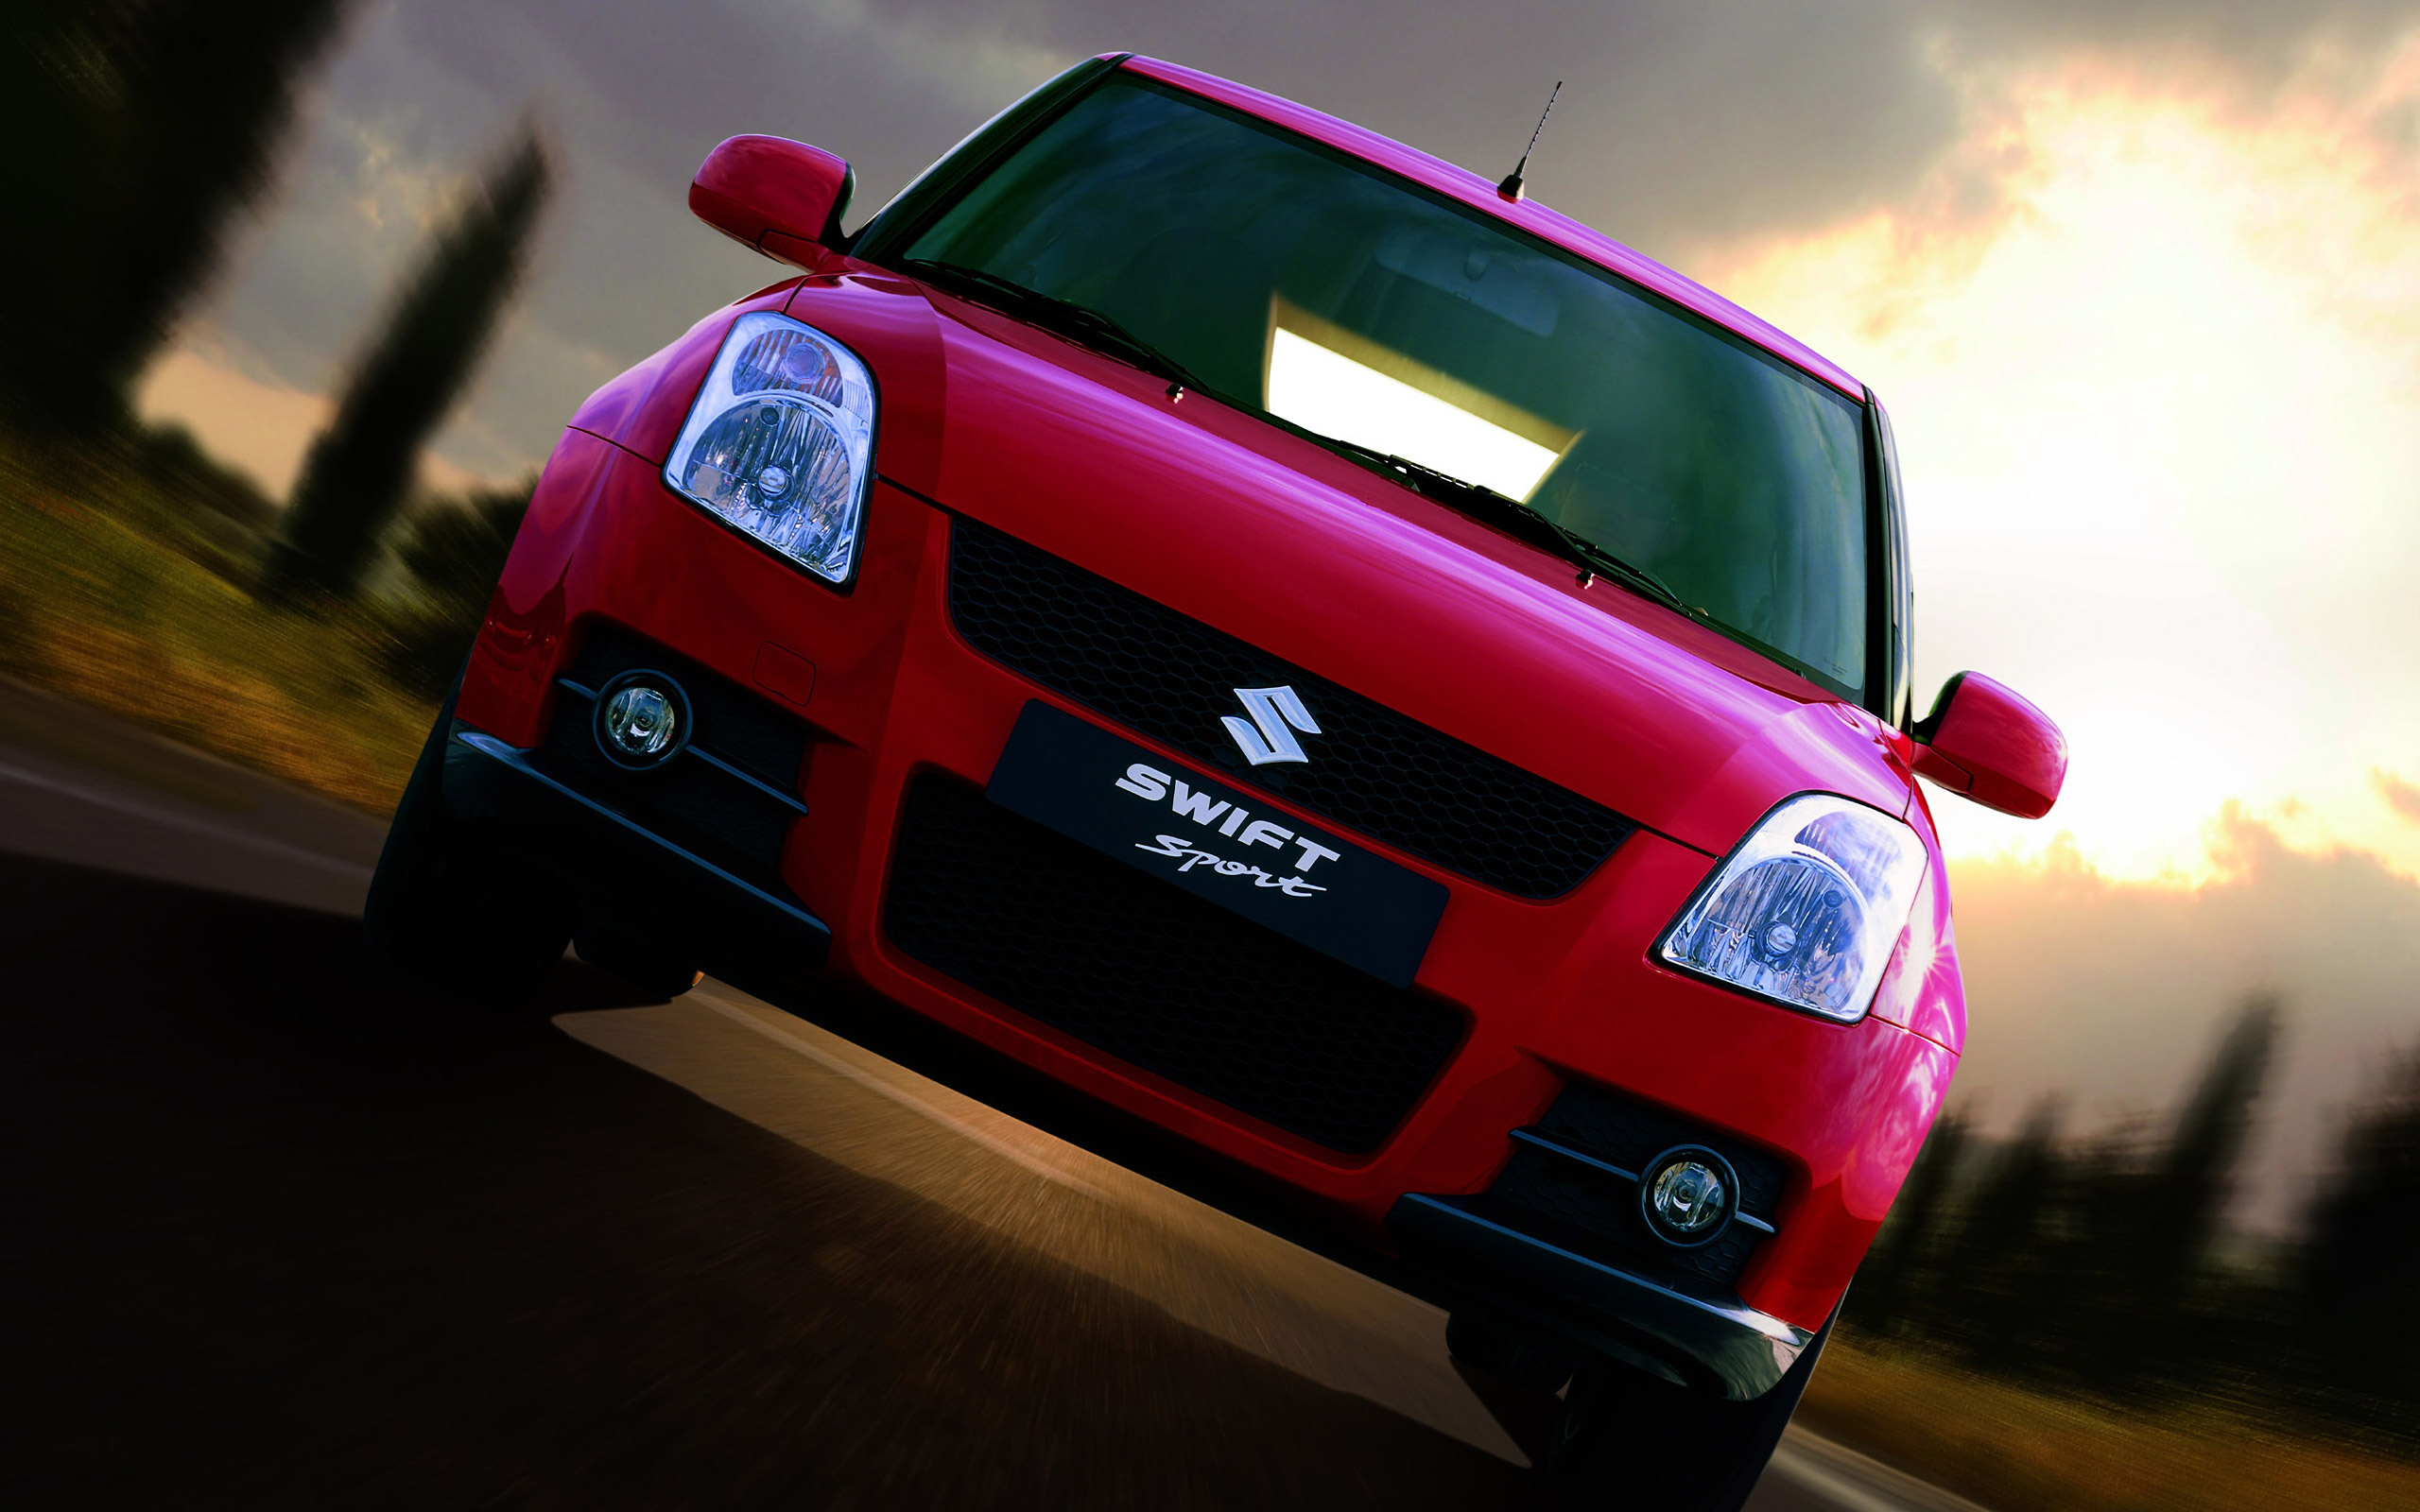  2005 Suzuki Swift Sport Wallpaper.